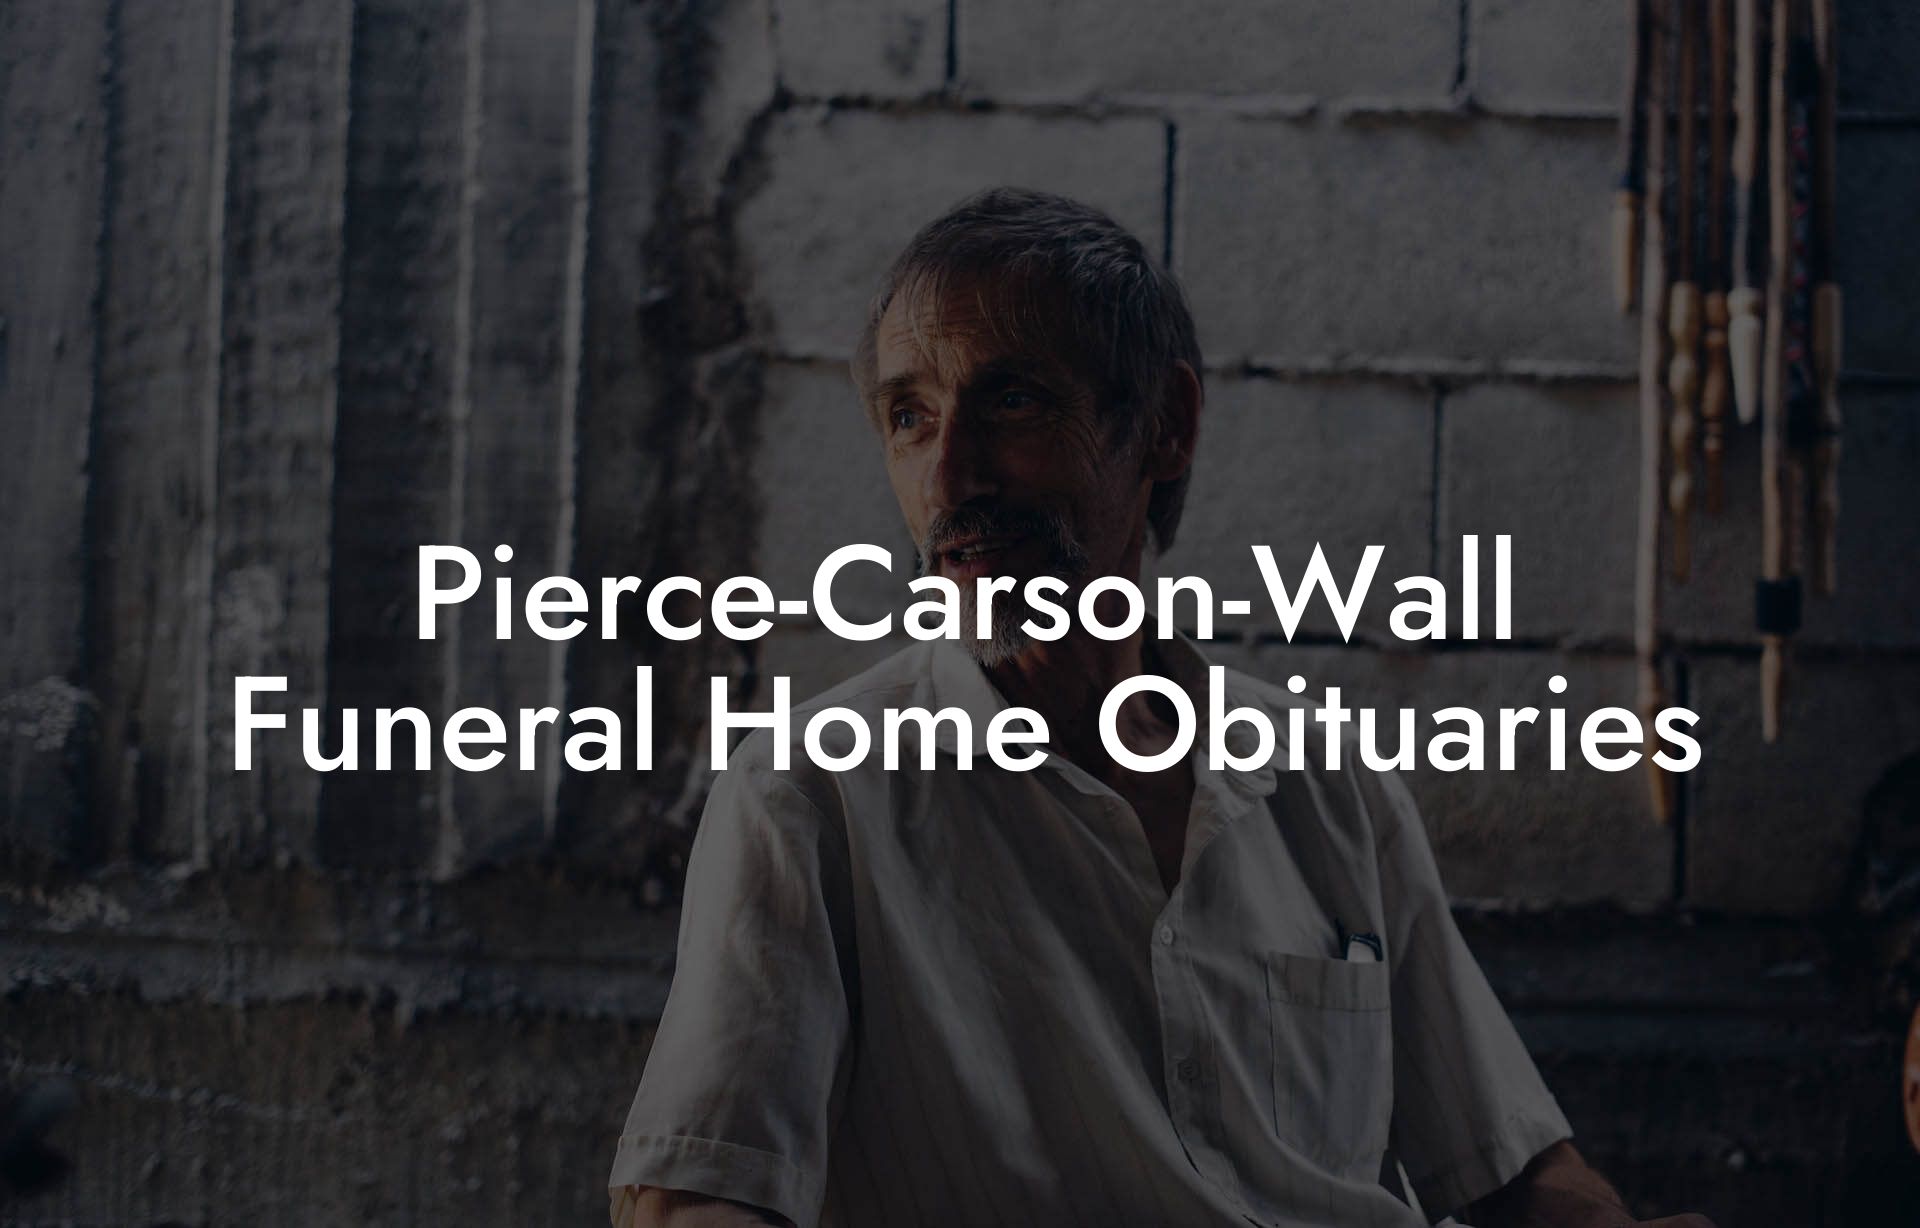 Pierce-Carson-Wall Funeral Home Obituaries